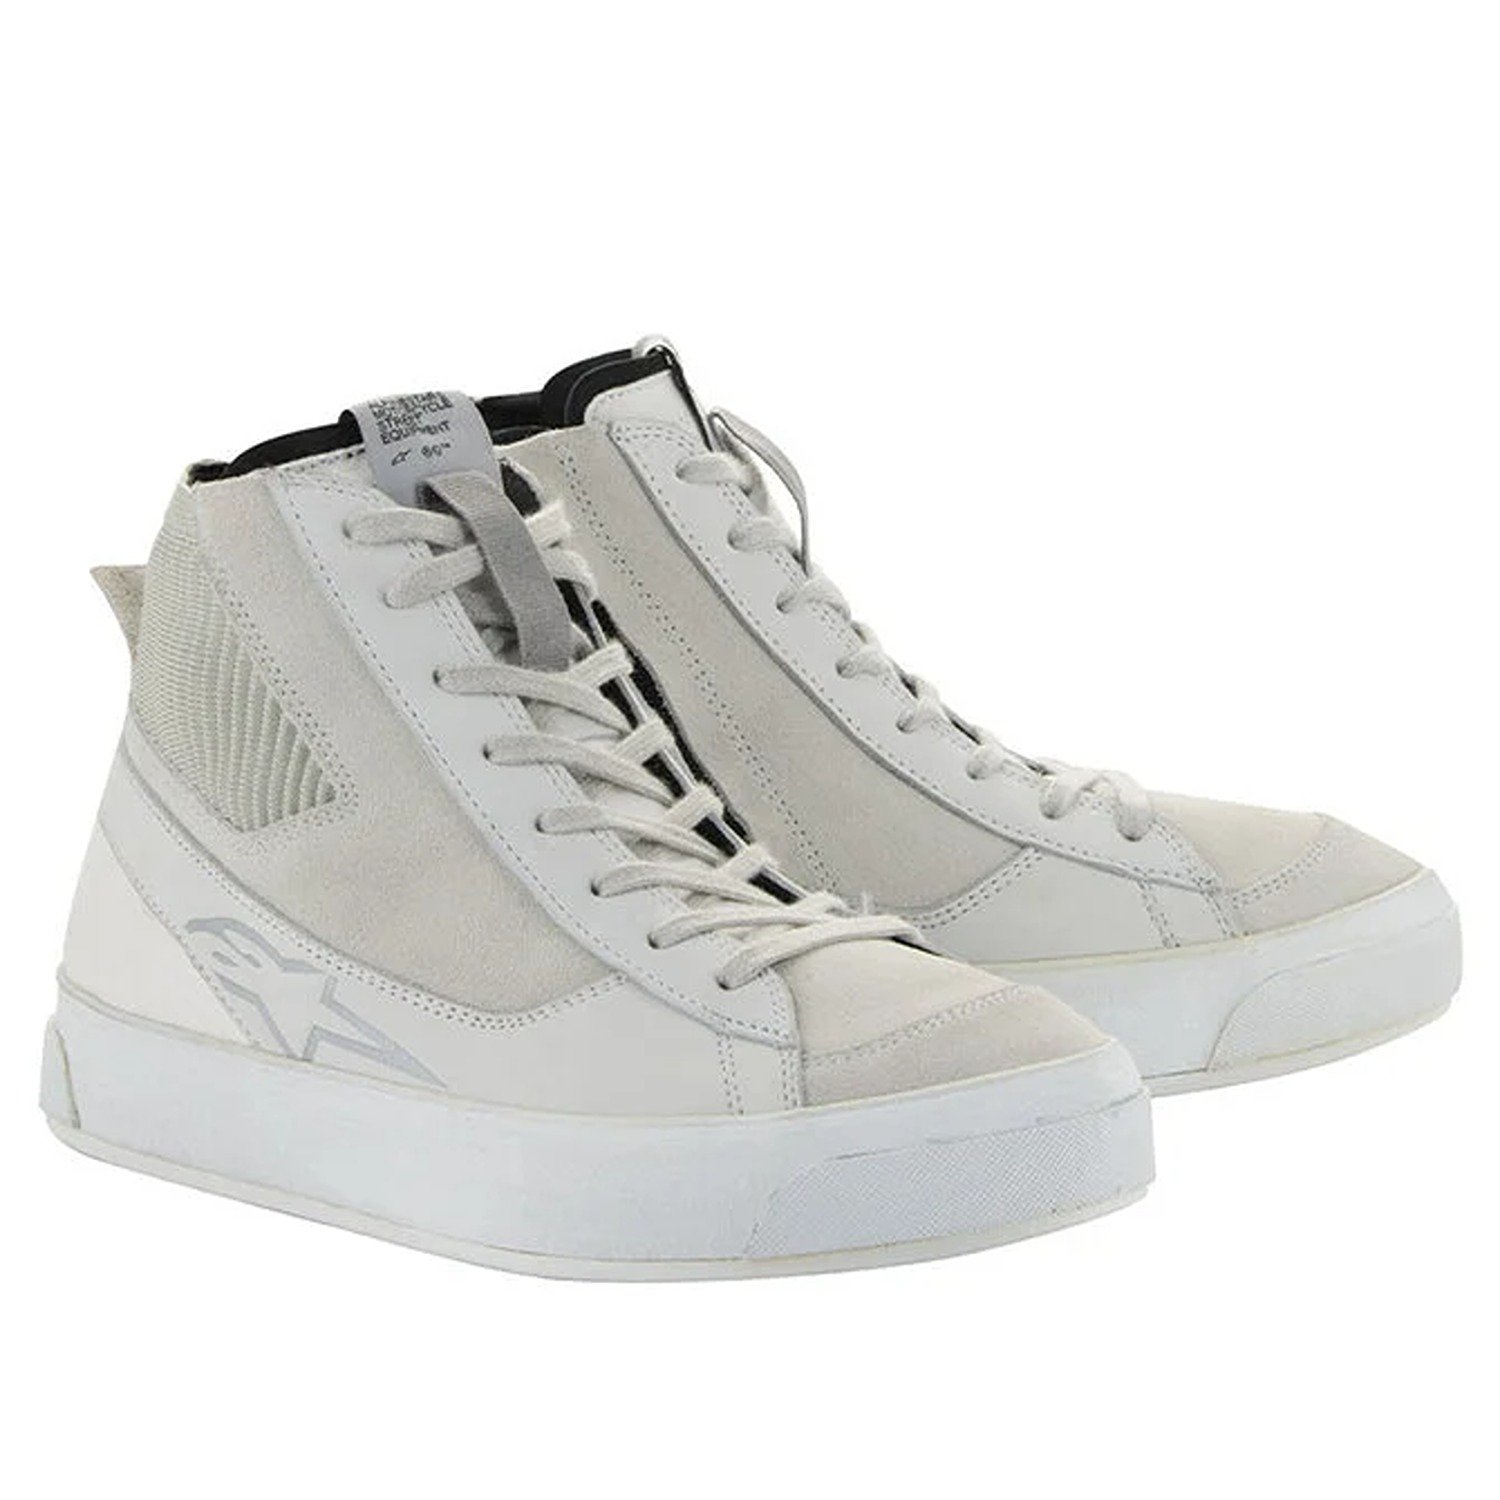 Image of Alpinestars Stella Stated Podium Shoes White Cool Gray Größe US 11